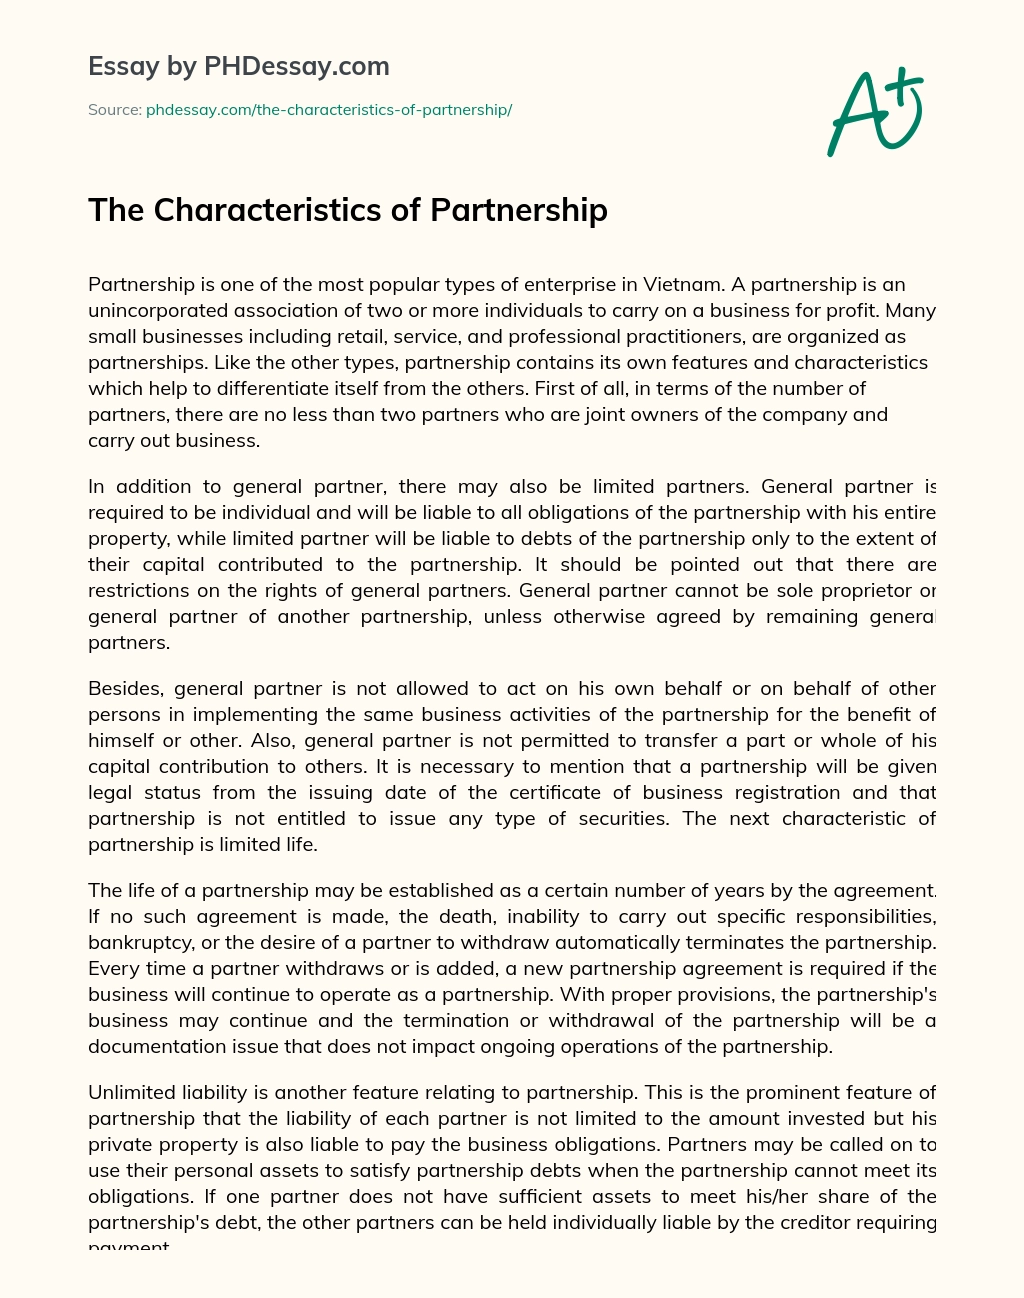 The Characteristics of Partnership essay